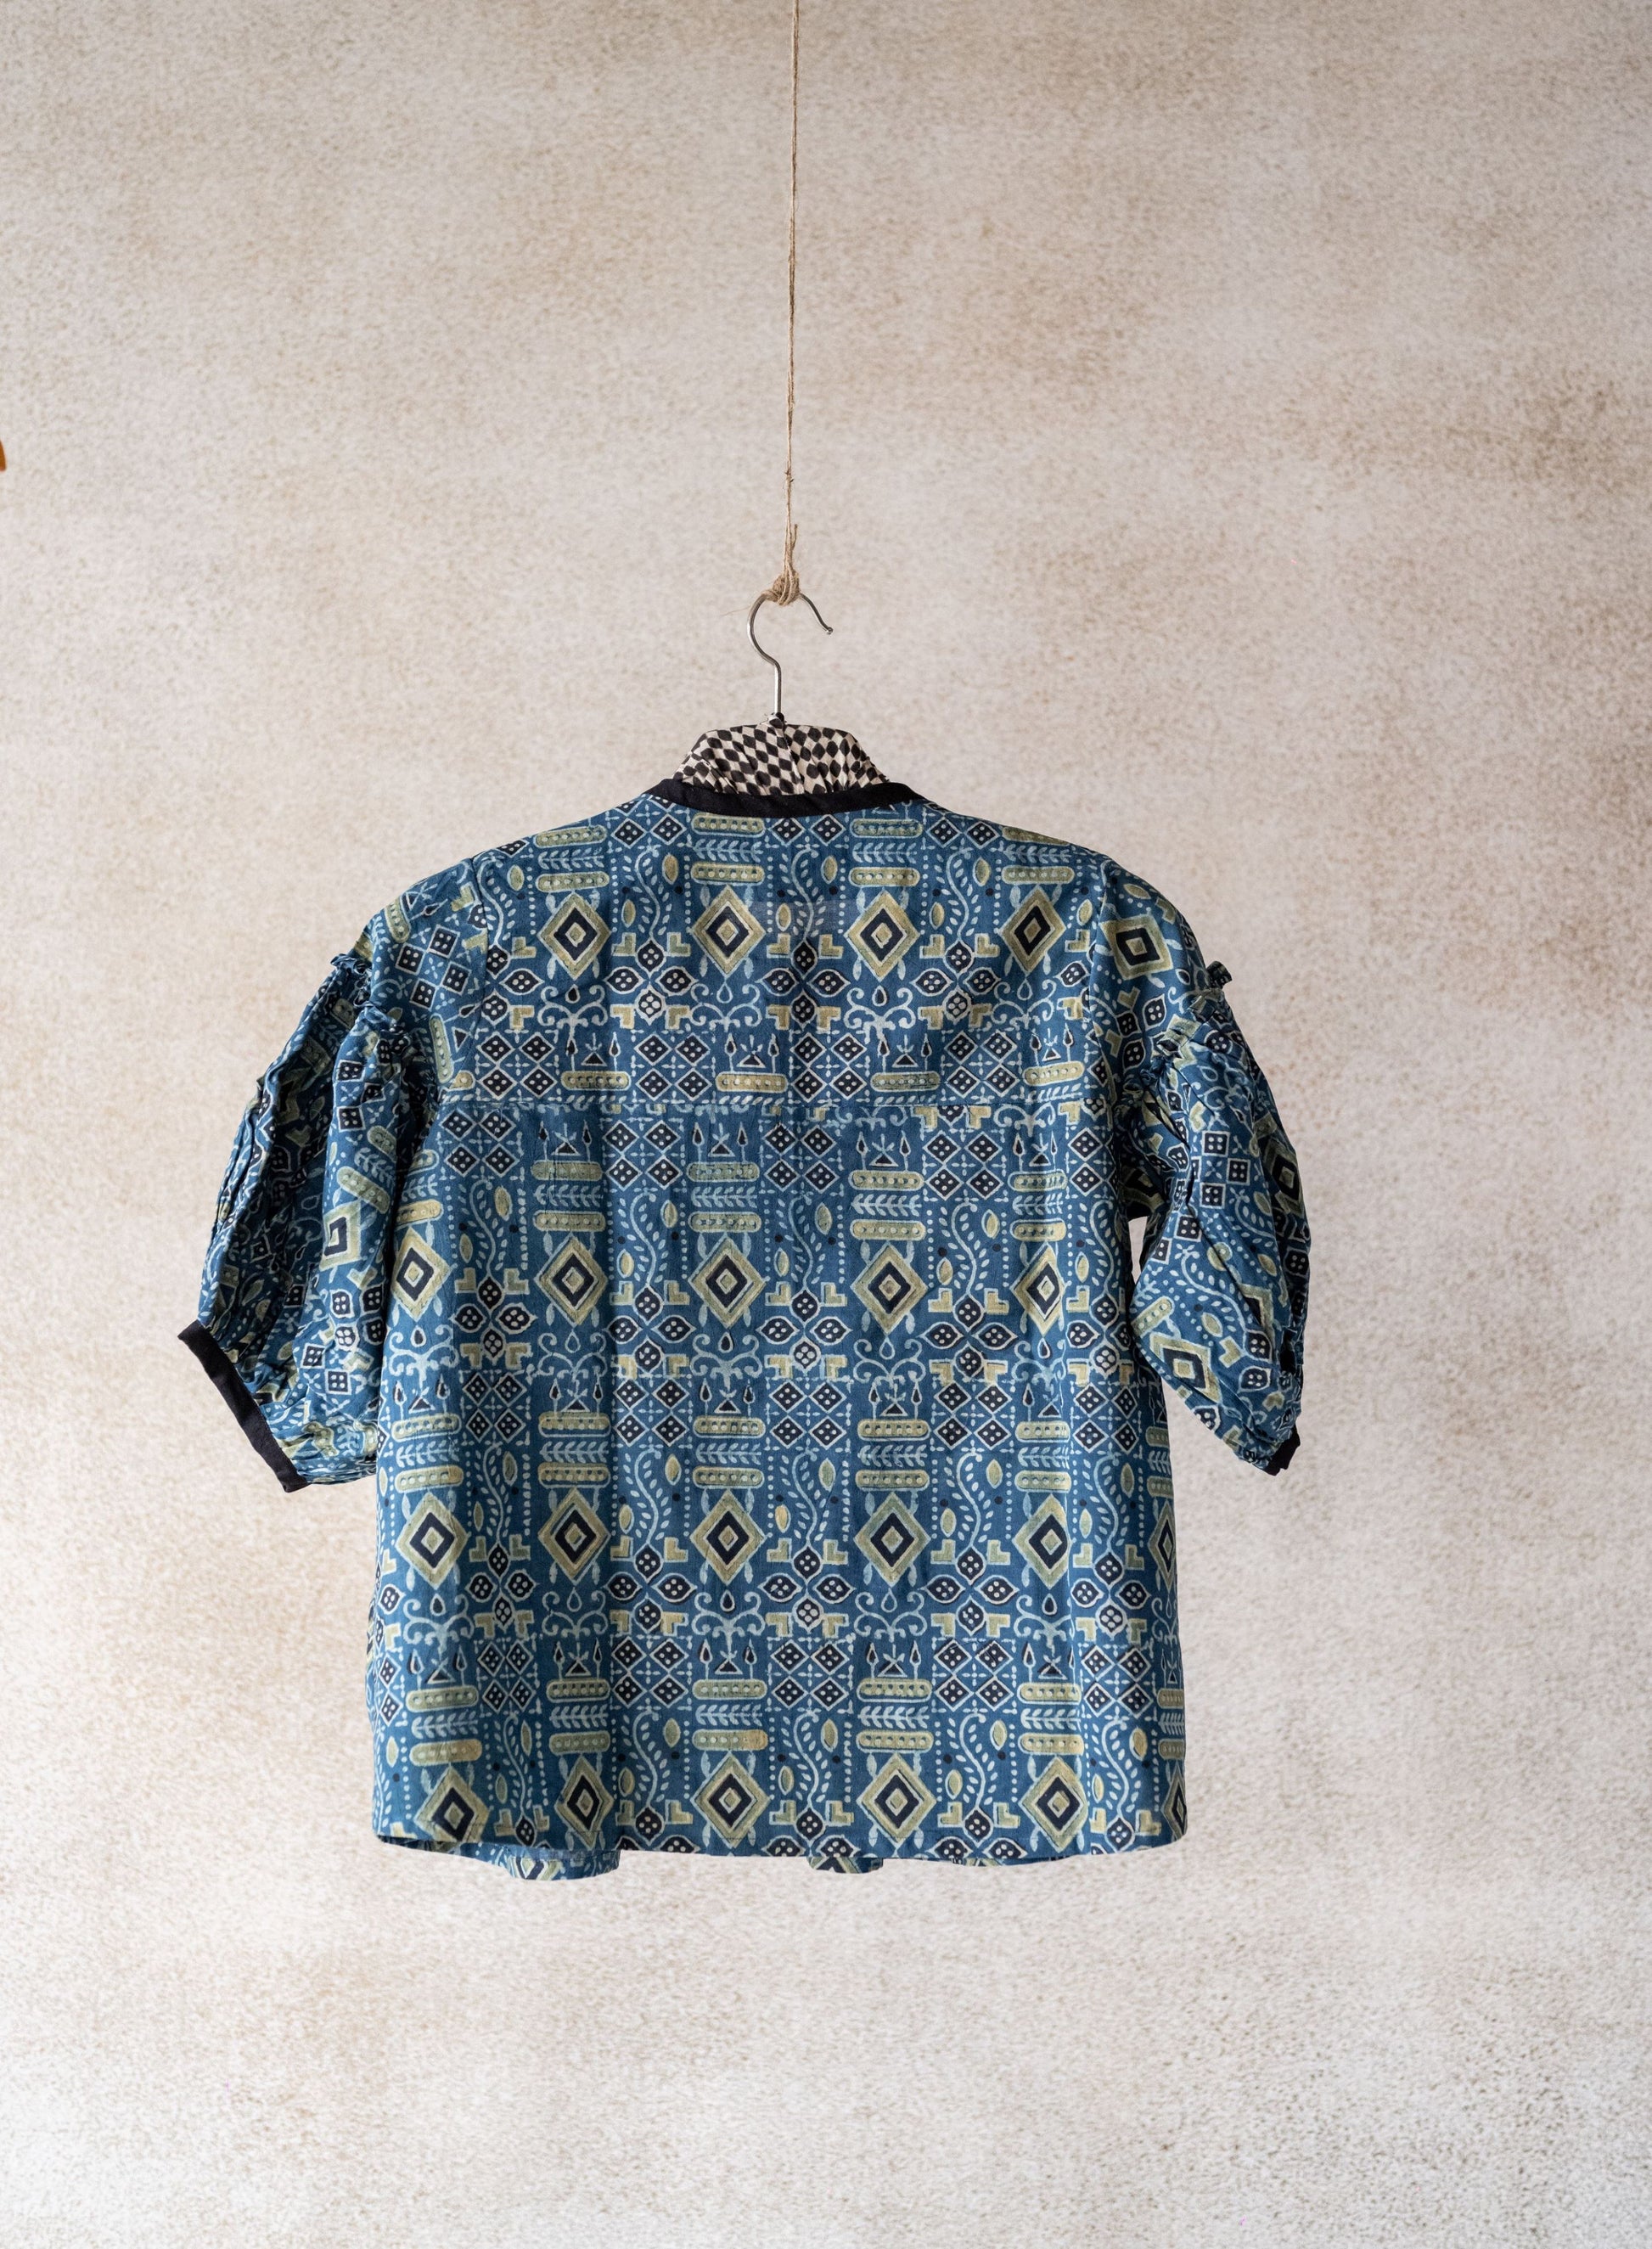 Indigo ajrakh puffed sleeves shirt, Handmade indigo shirt, Indigo women's shirt in cotton